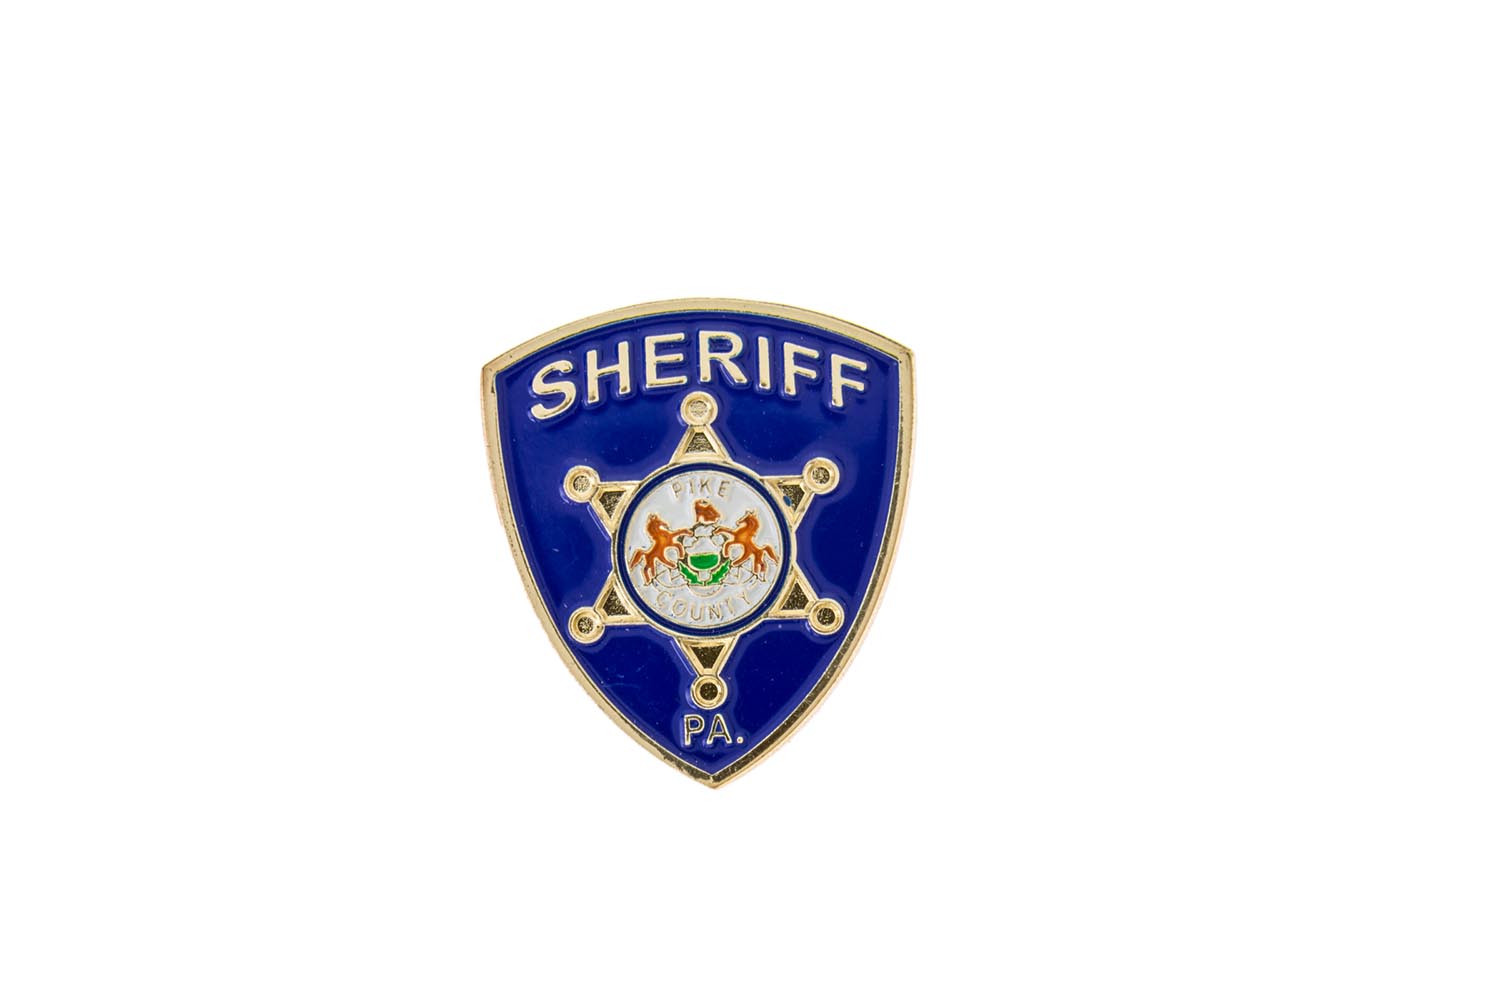 Sheriff lapel pins